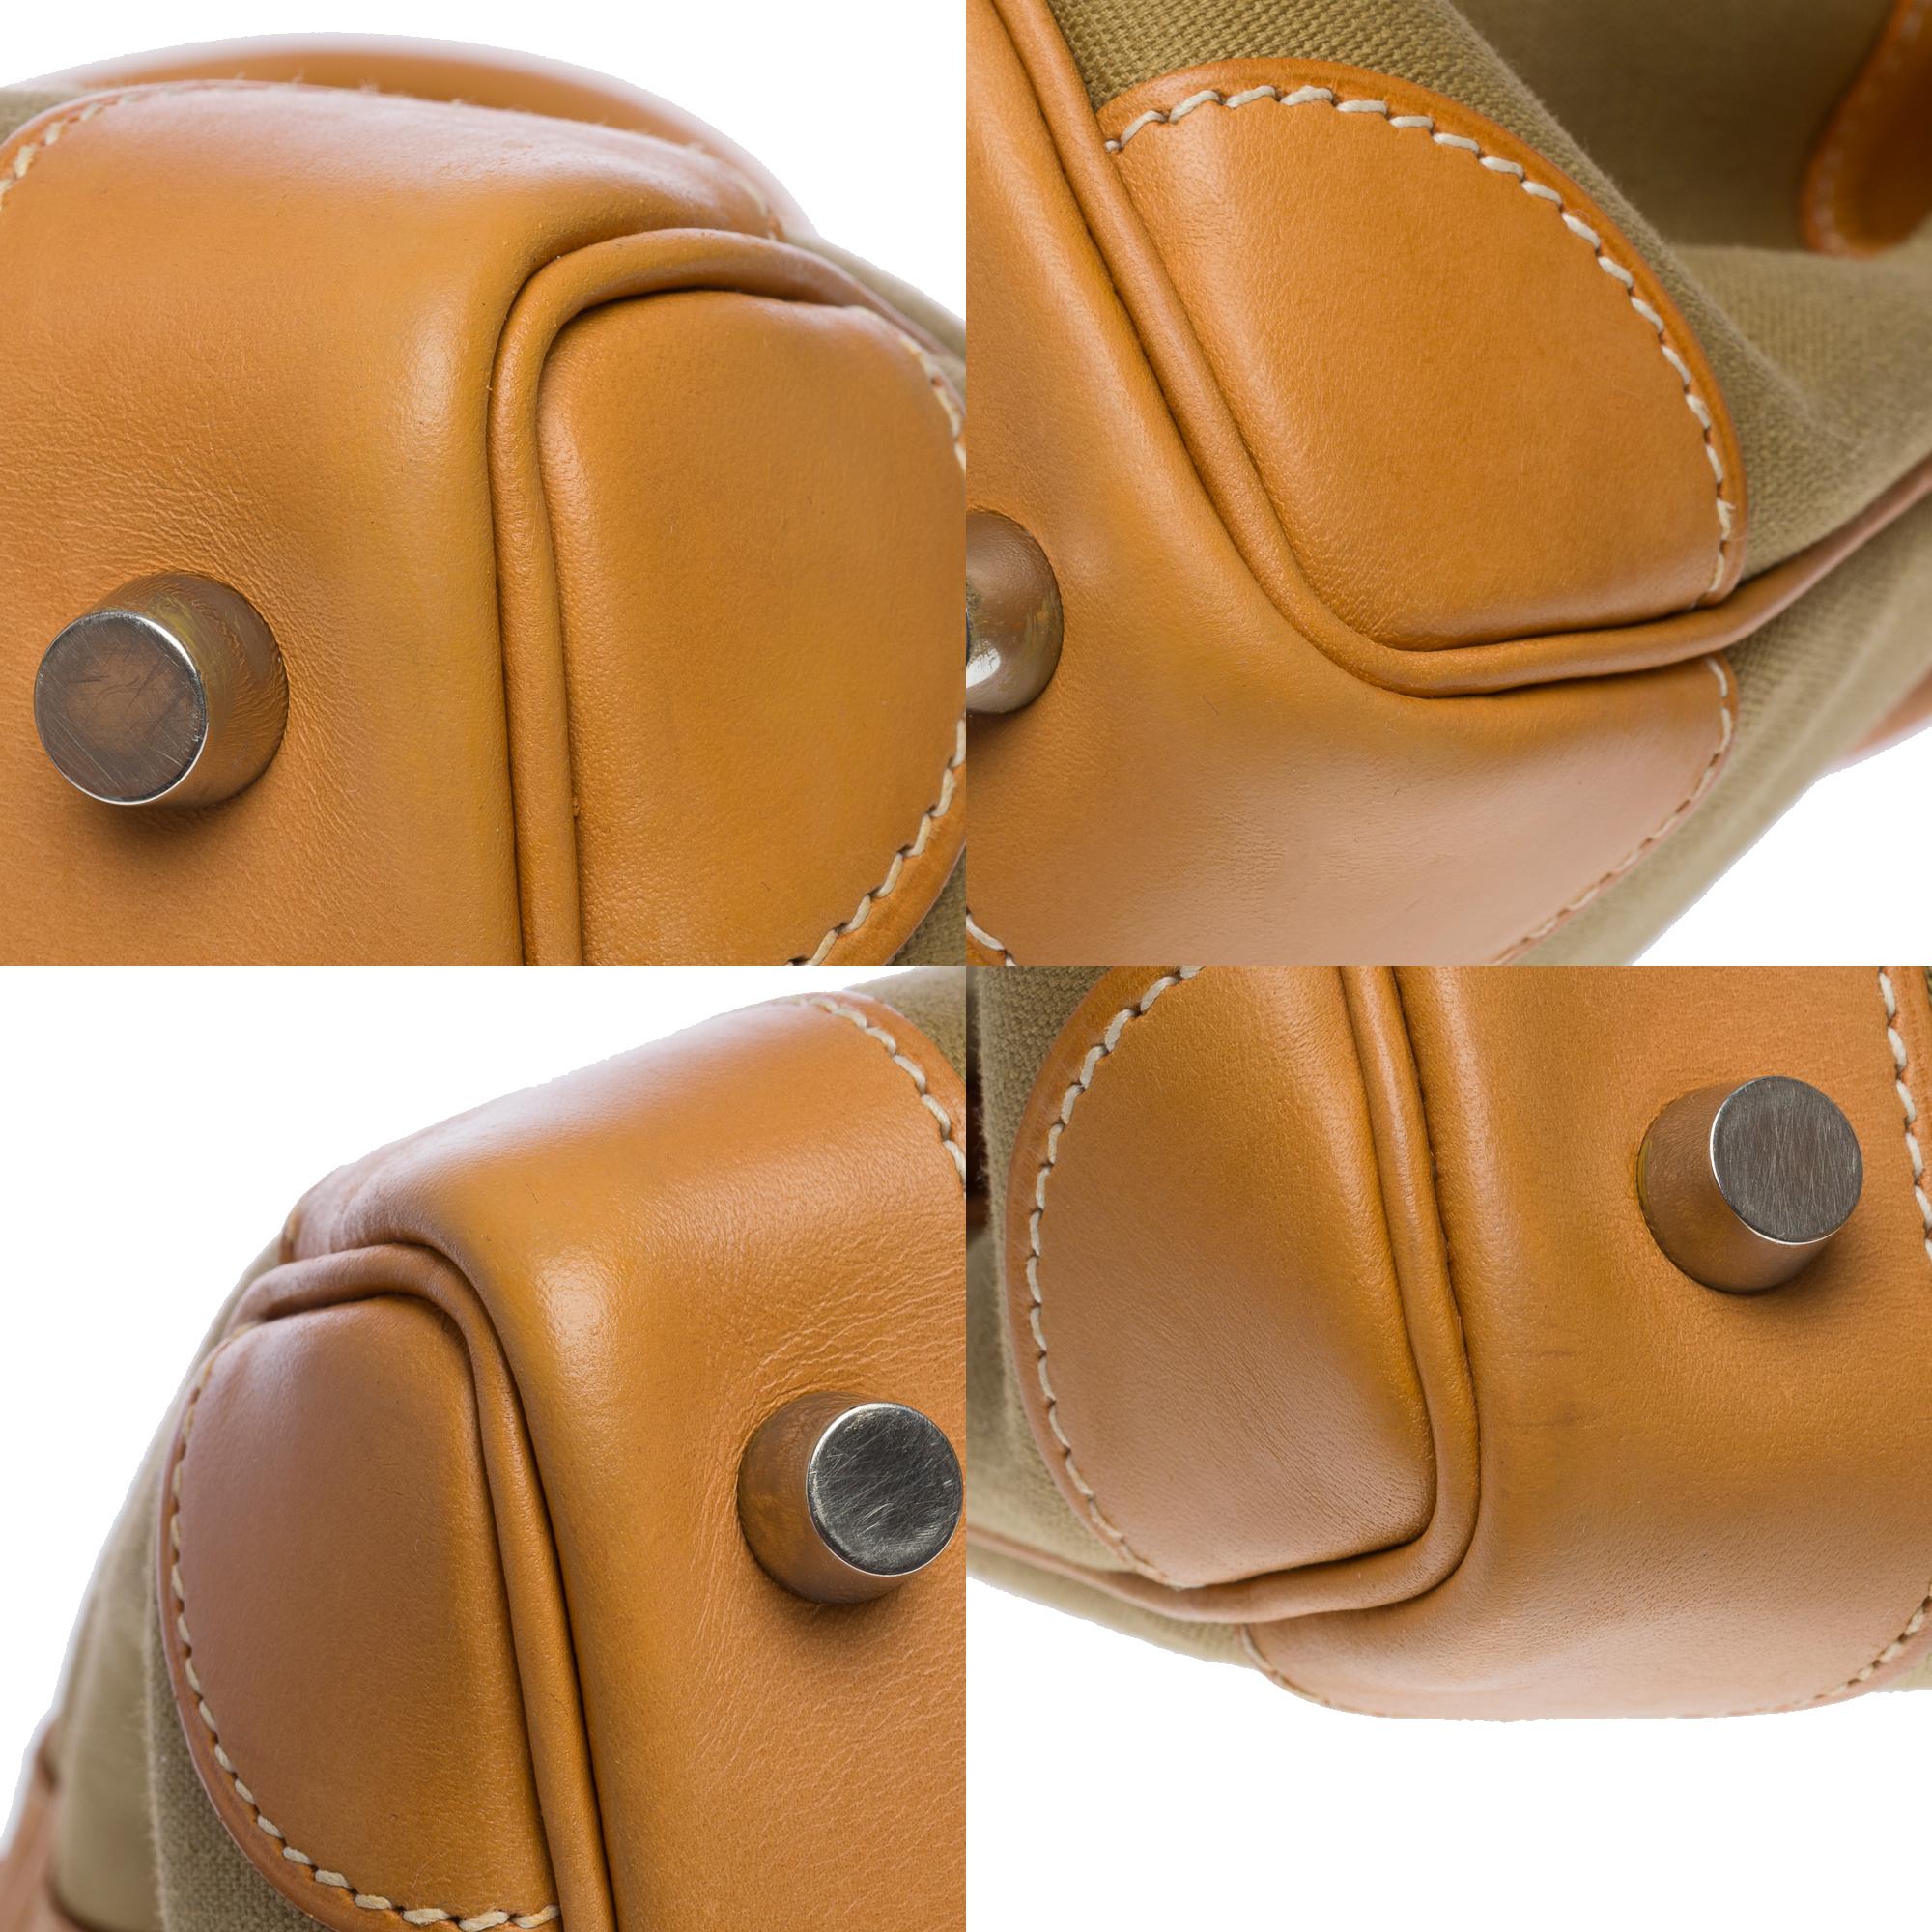 Rare Hermès Birkin 30 handbag in khaki canvas and natural calf leather, SHW For Sale 3